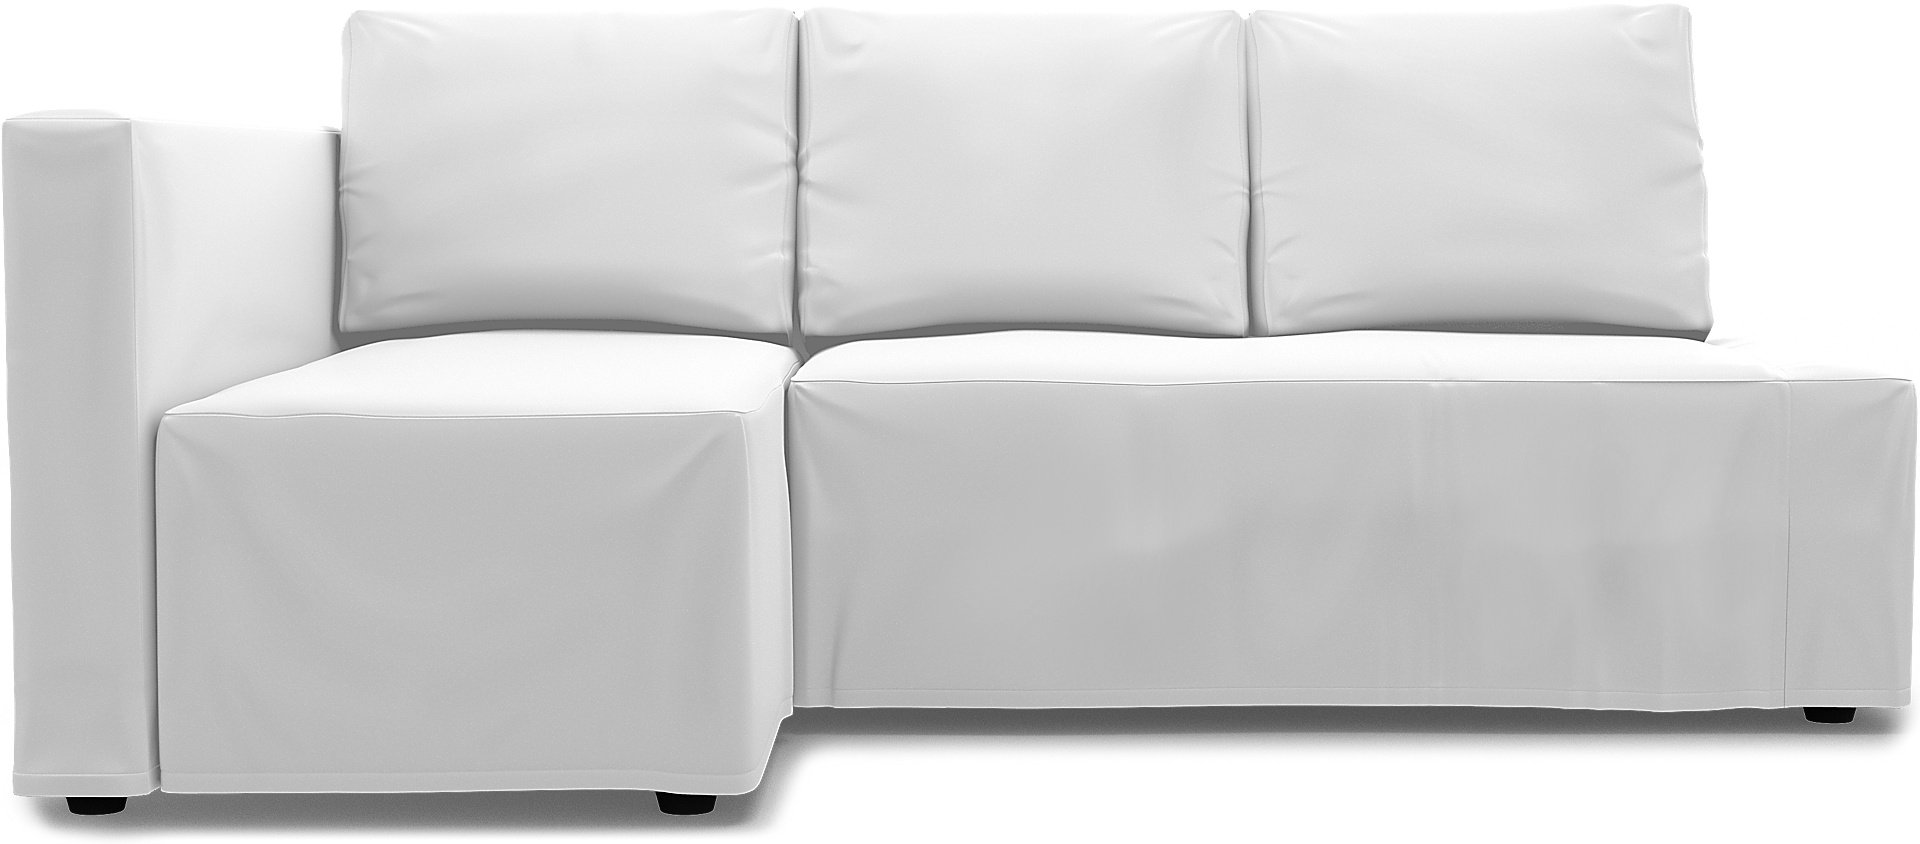 IKEA - Friheten Sofa Bed with Left Chaise Cover, Absolute White, Linen - Bemz